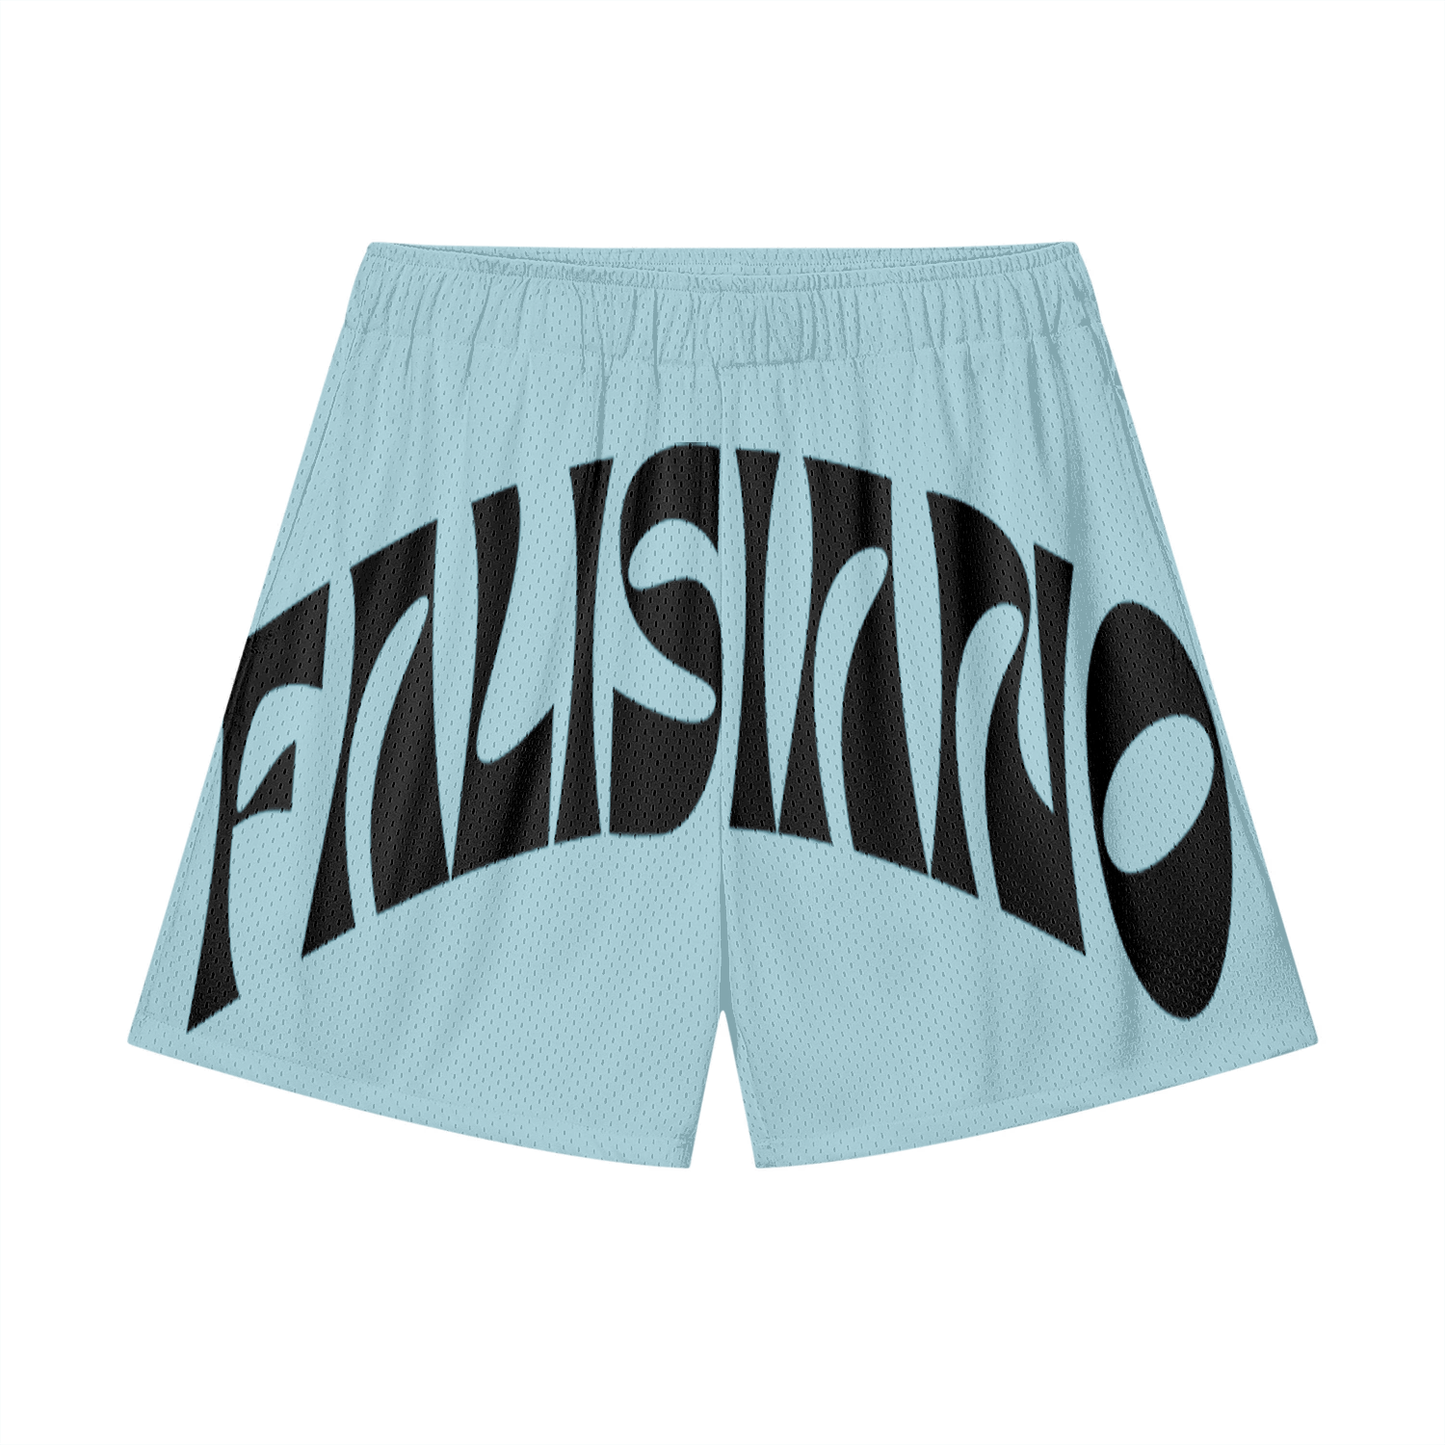 Falisiano Signature Shorts